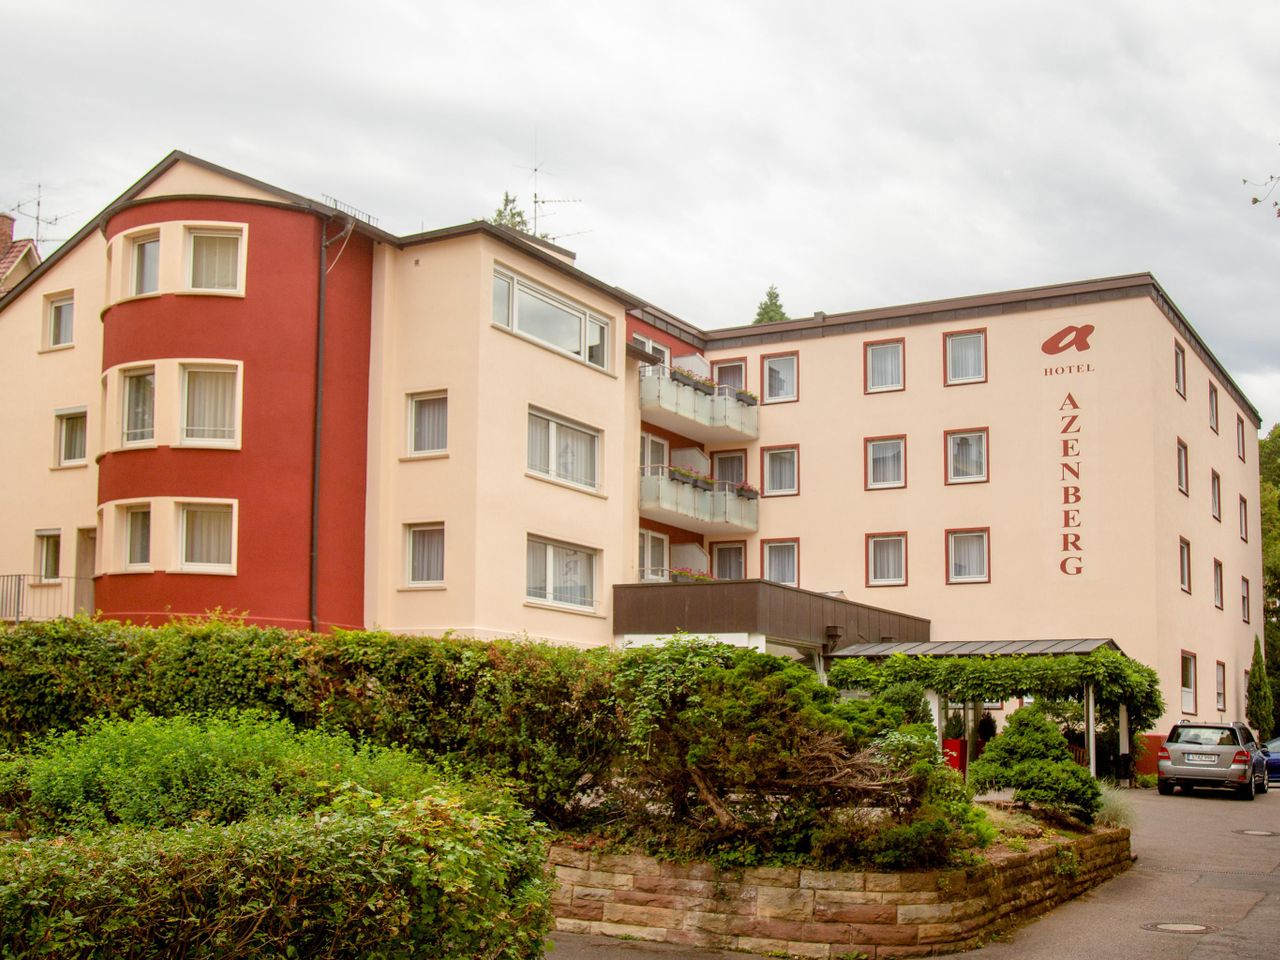 7 Tage im Hotel Azenberg Stuttgart 